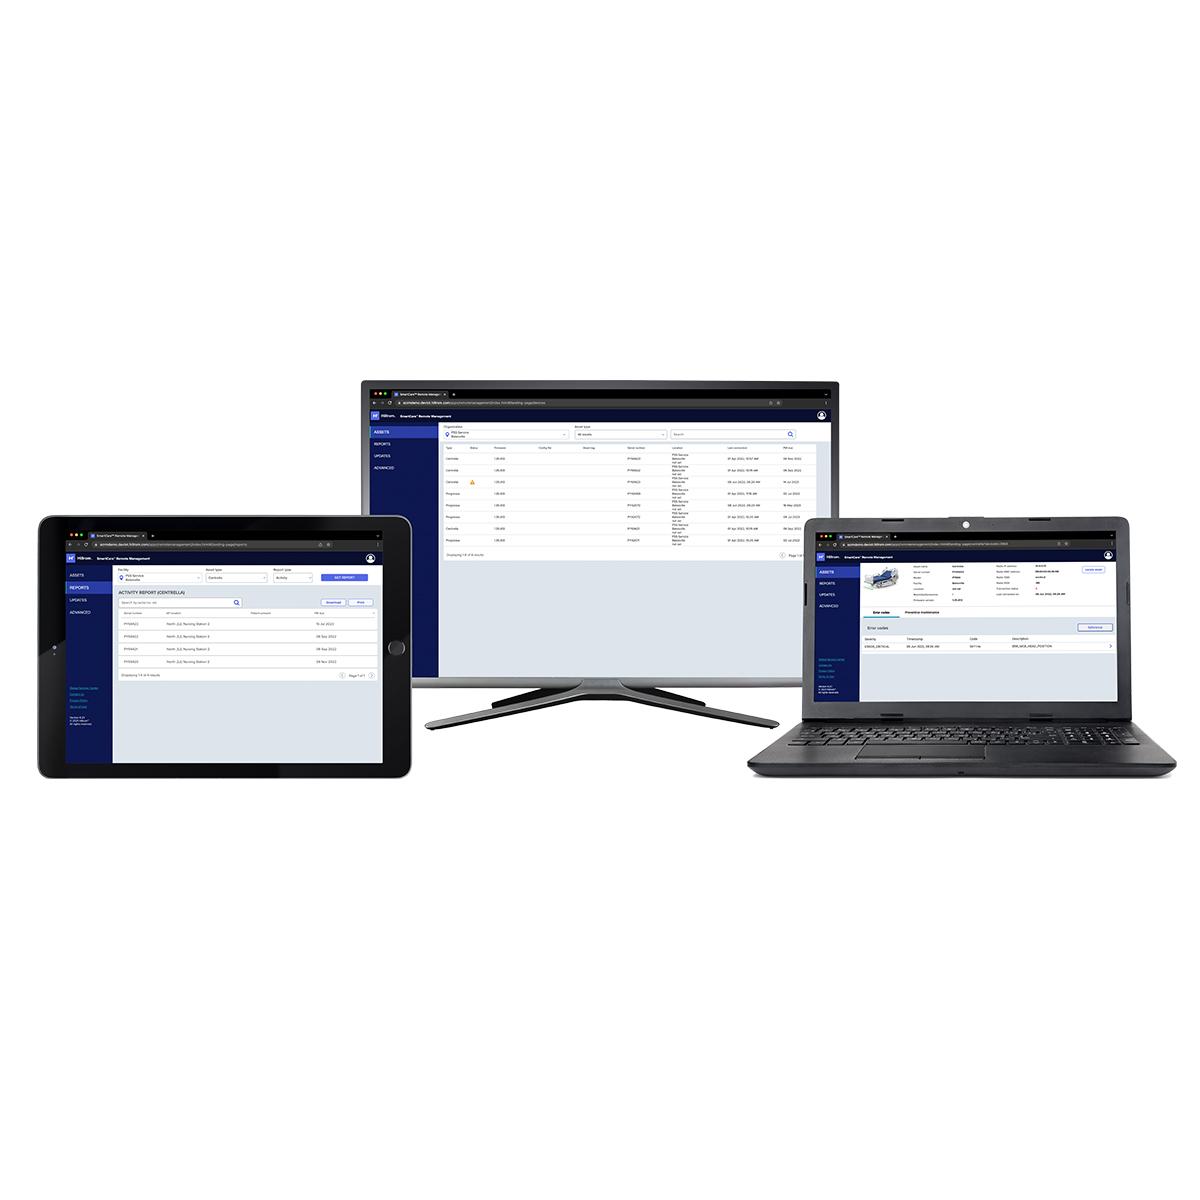 SmartCare™ Remote Management software is displayed on multiple devices — a laptop, desktop computer and tablet.